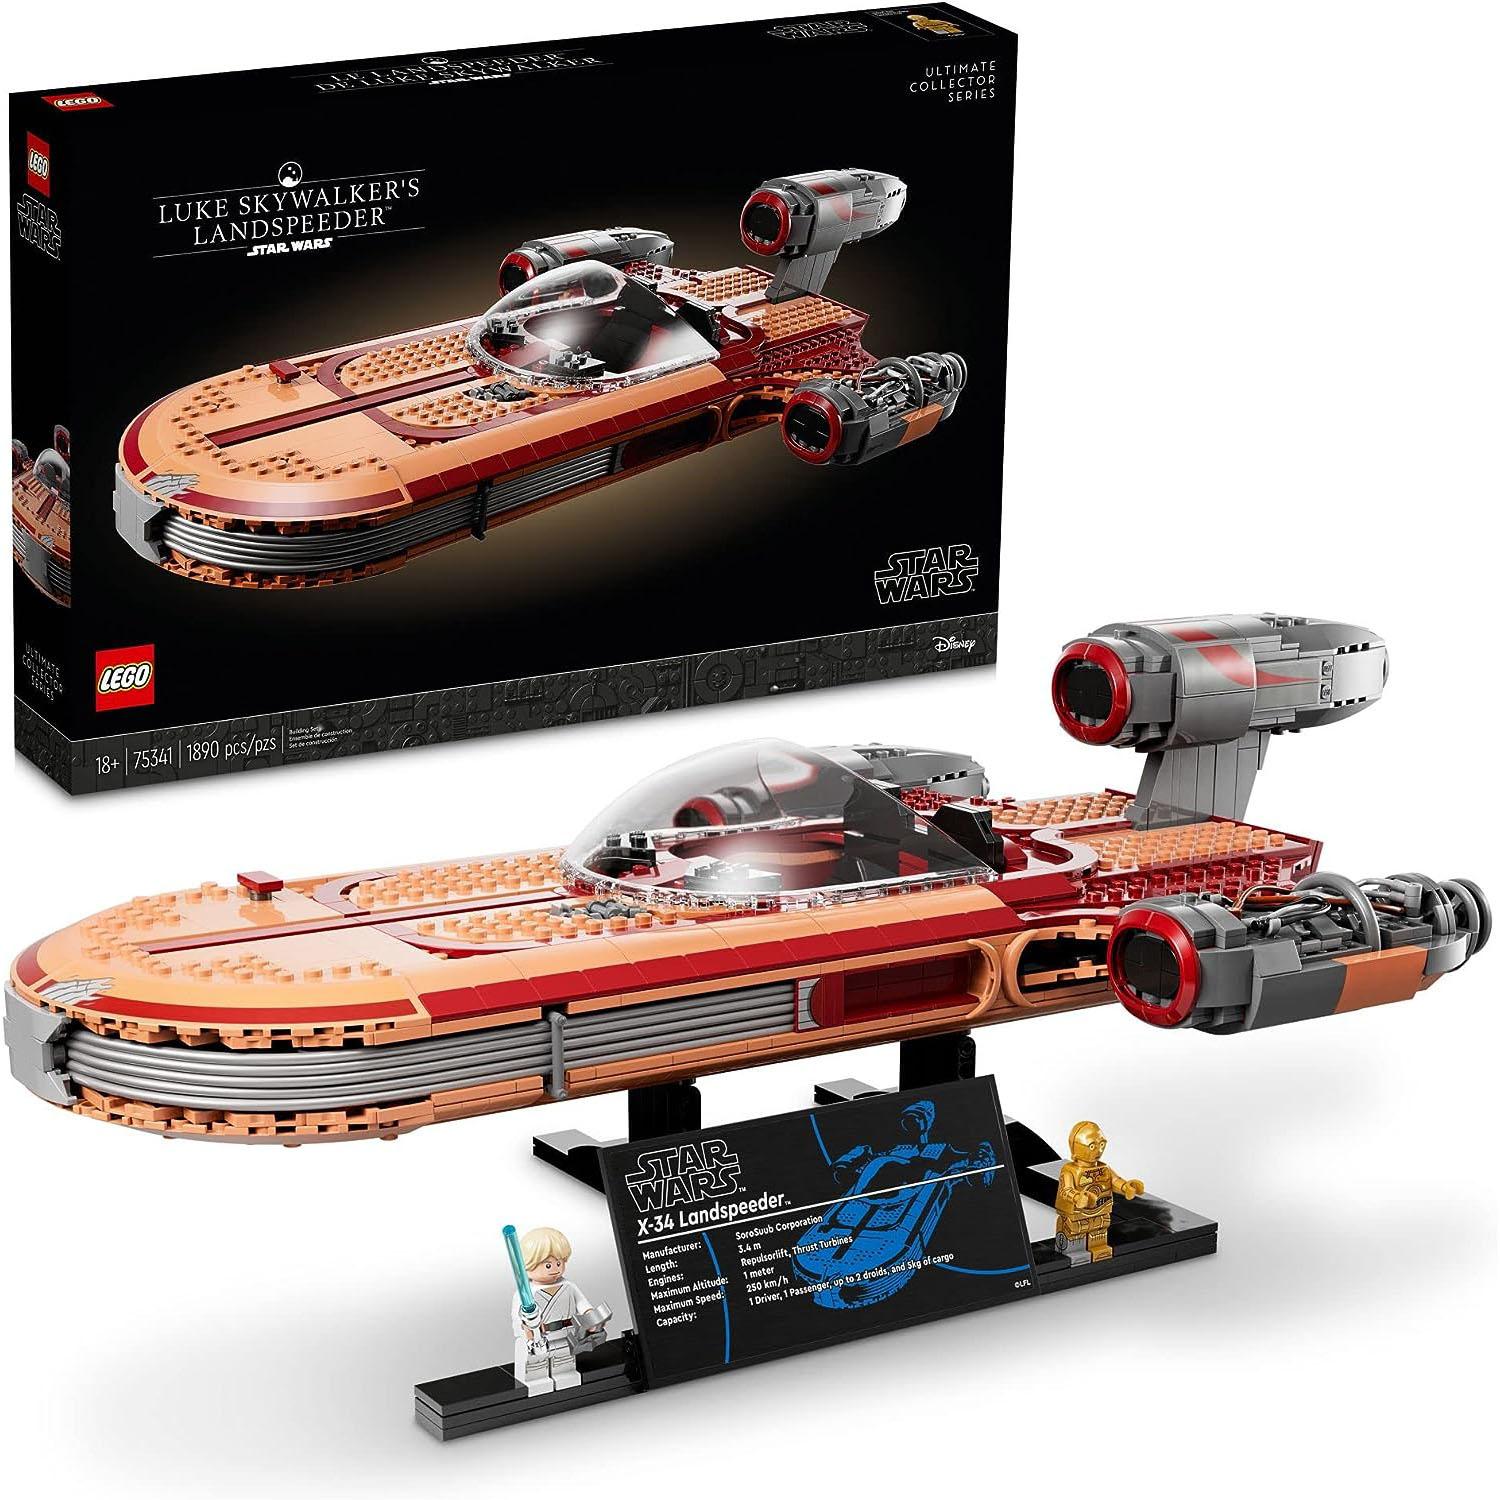 LEGO Star Wars Ultimate Collector Series Luke Skywalkers Landspeeder for $150 Shipped